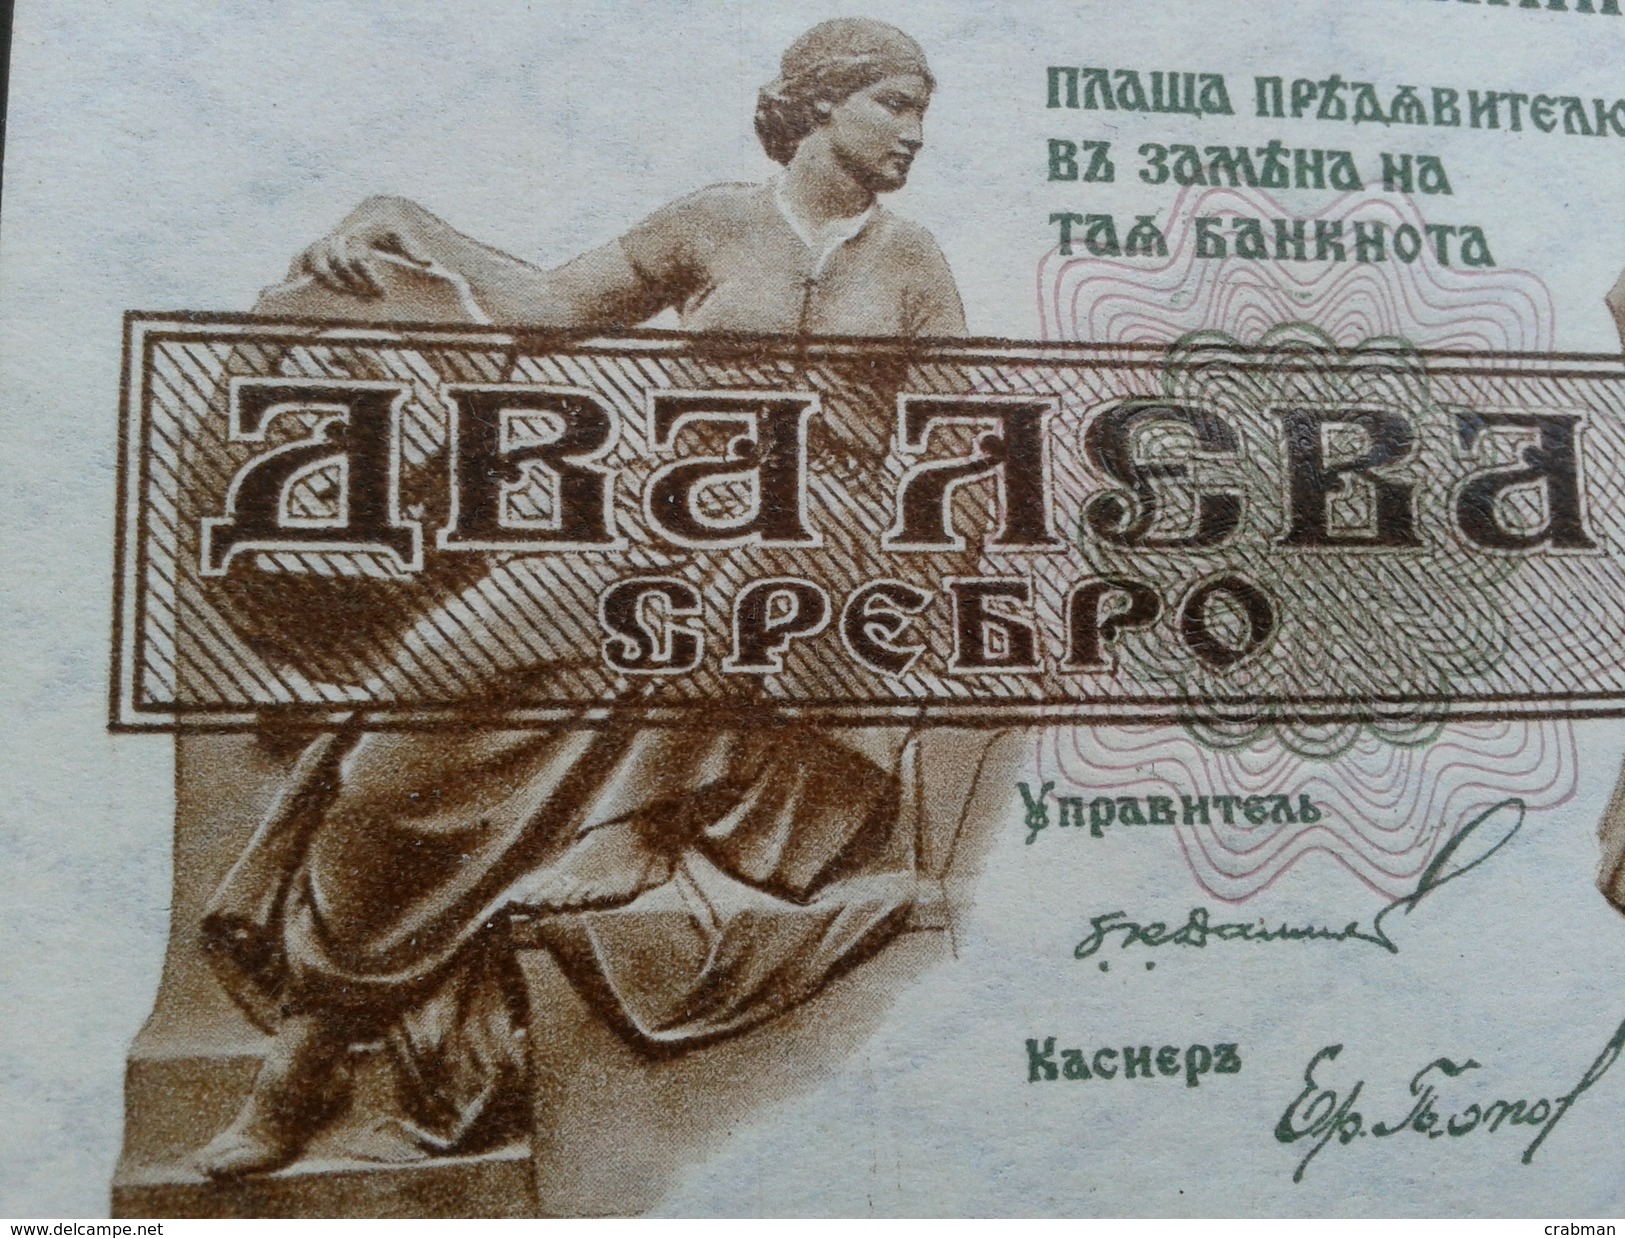 Bulgarian banknotes 1920 year,1 and 2 leva silver